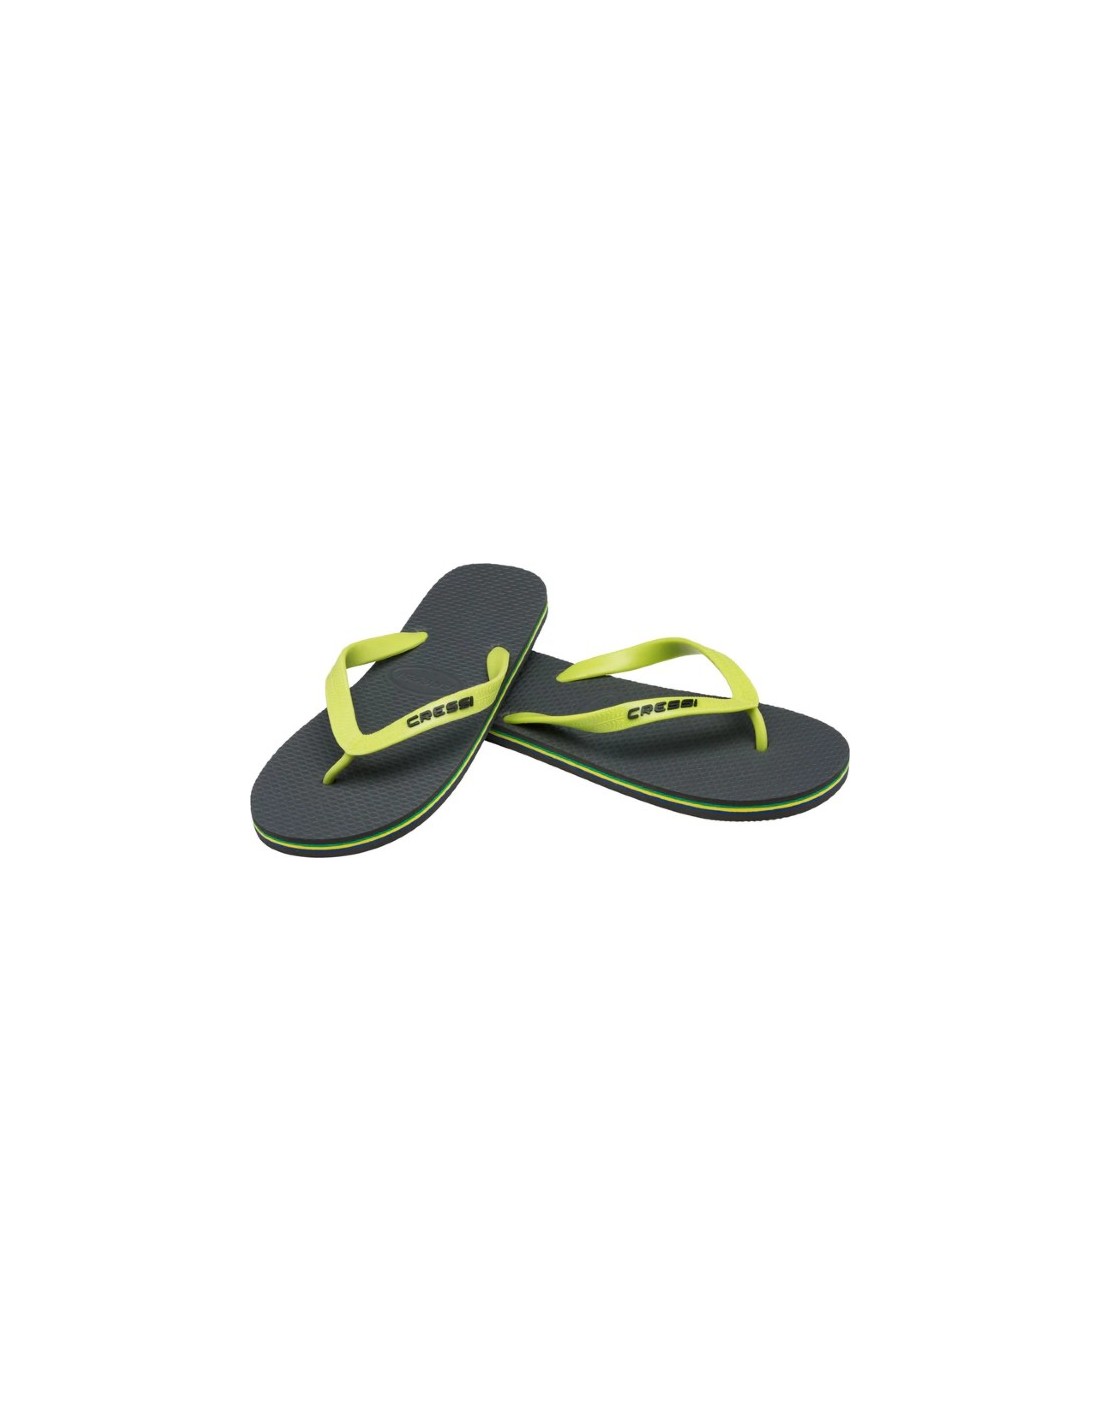 Cressi Beach Flip Flops - Adults - Various Colours